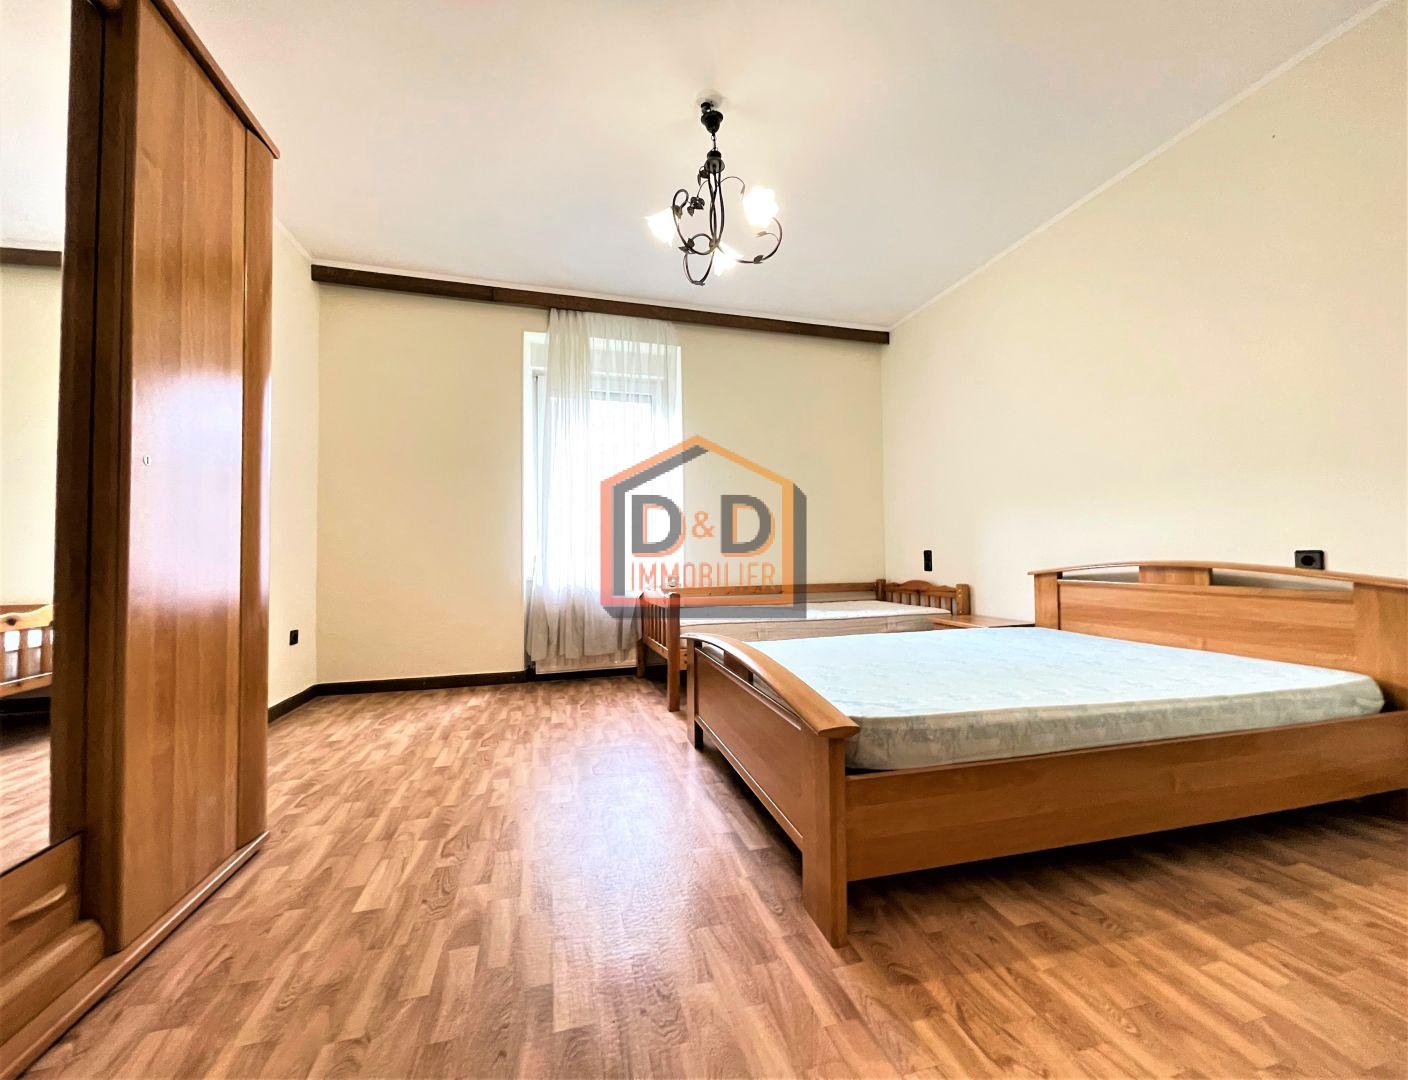 Appartement à Niederkorn, 85 m², 3 chambres, 1 550 €/mois